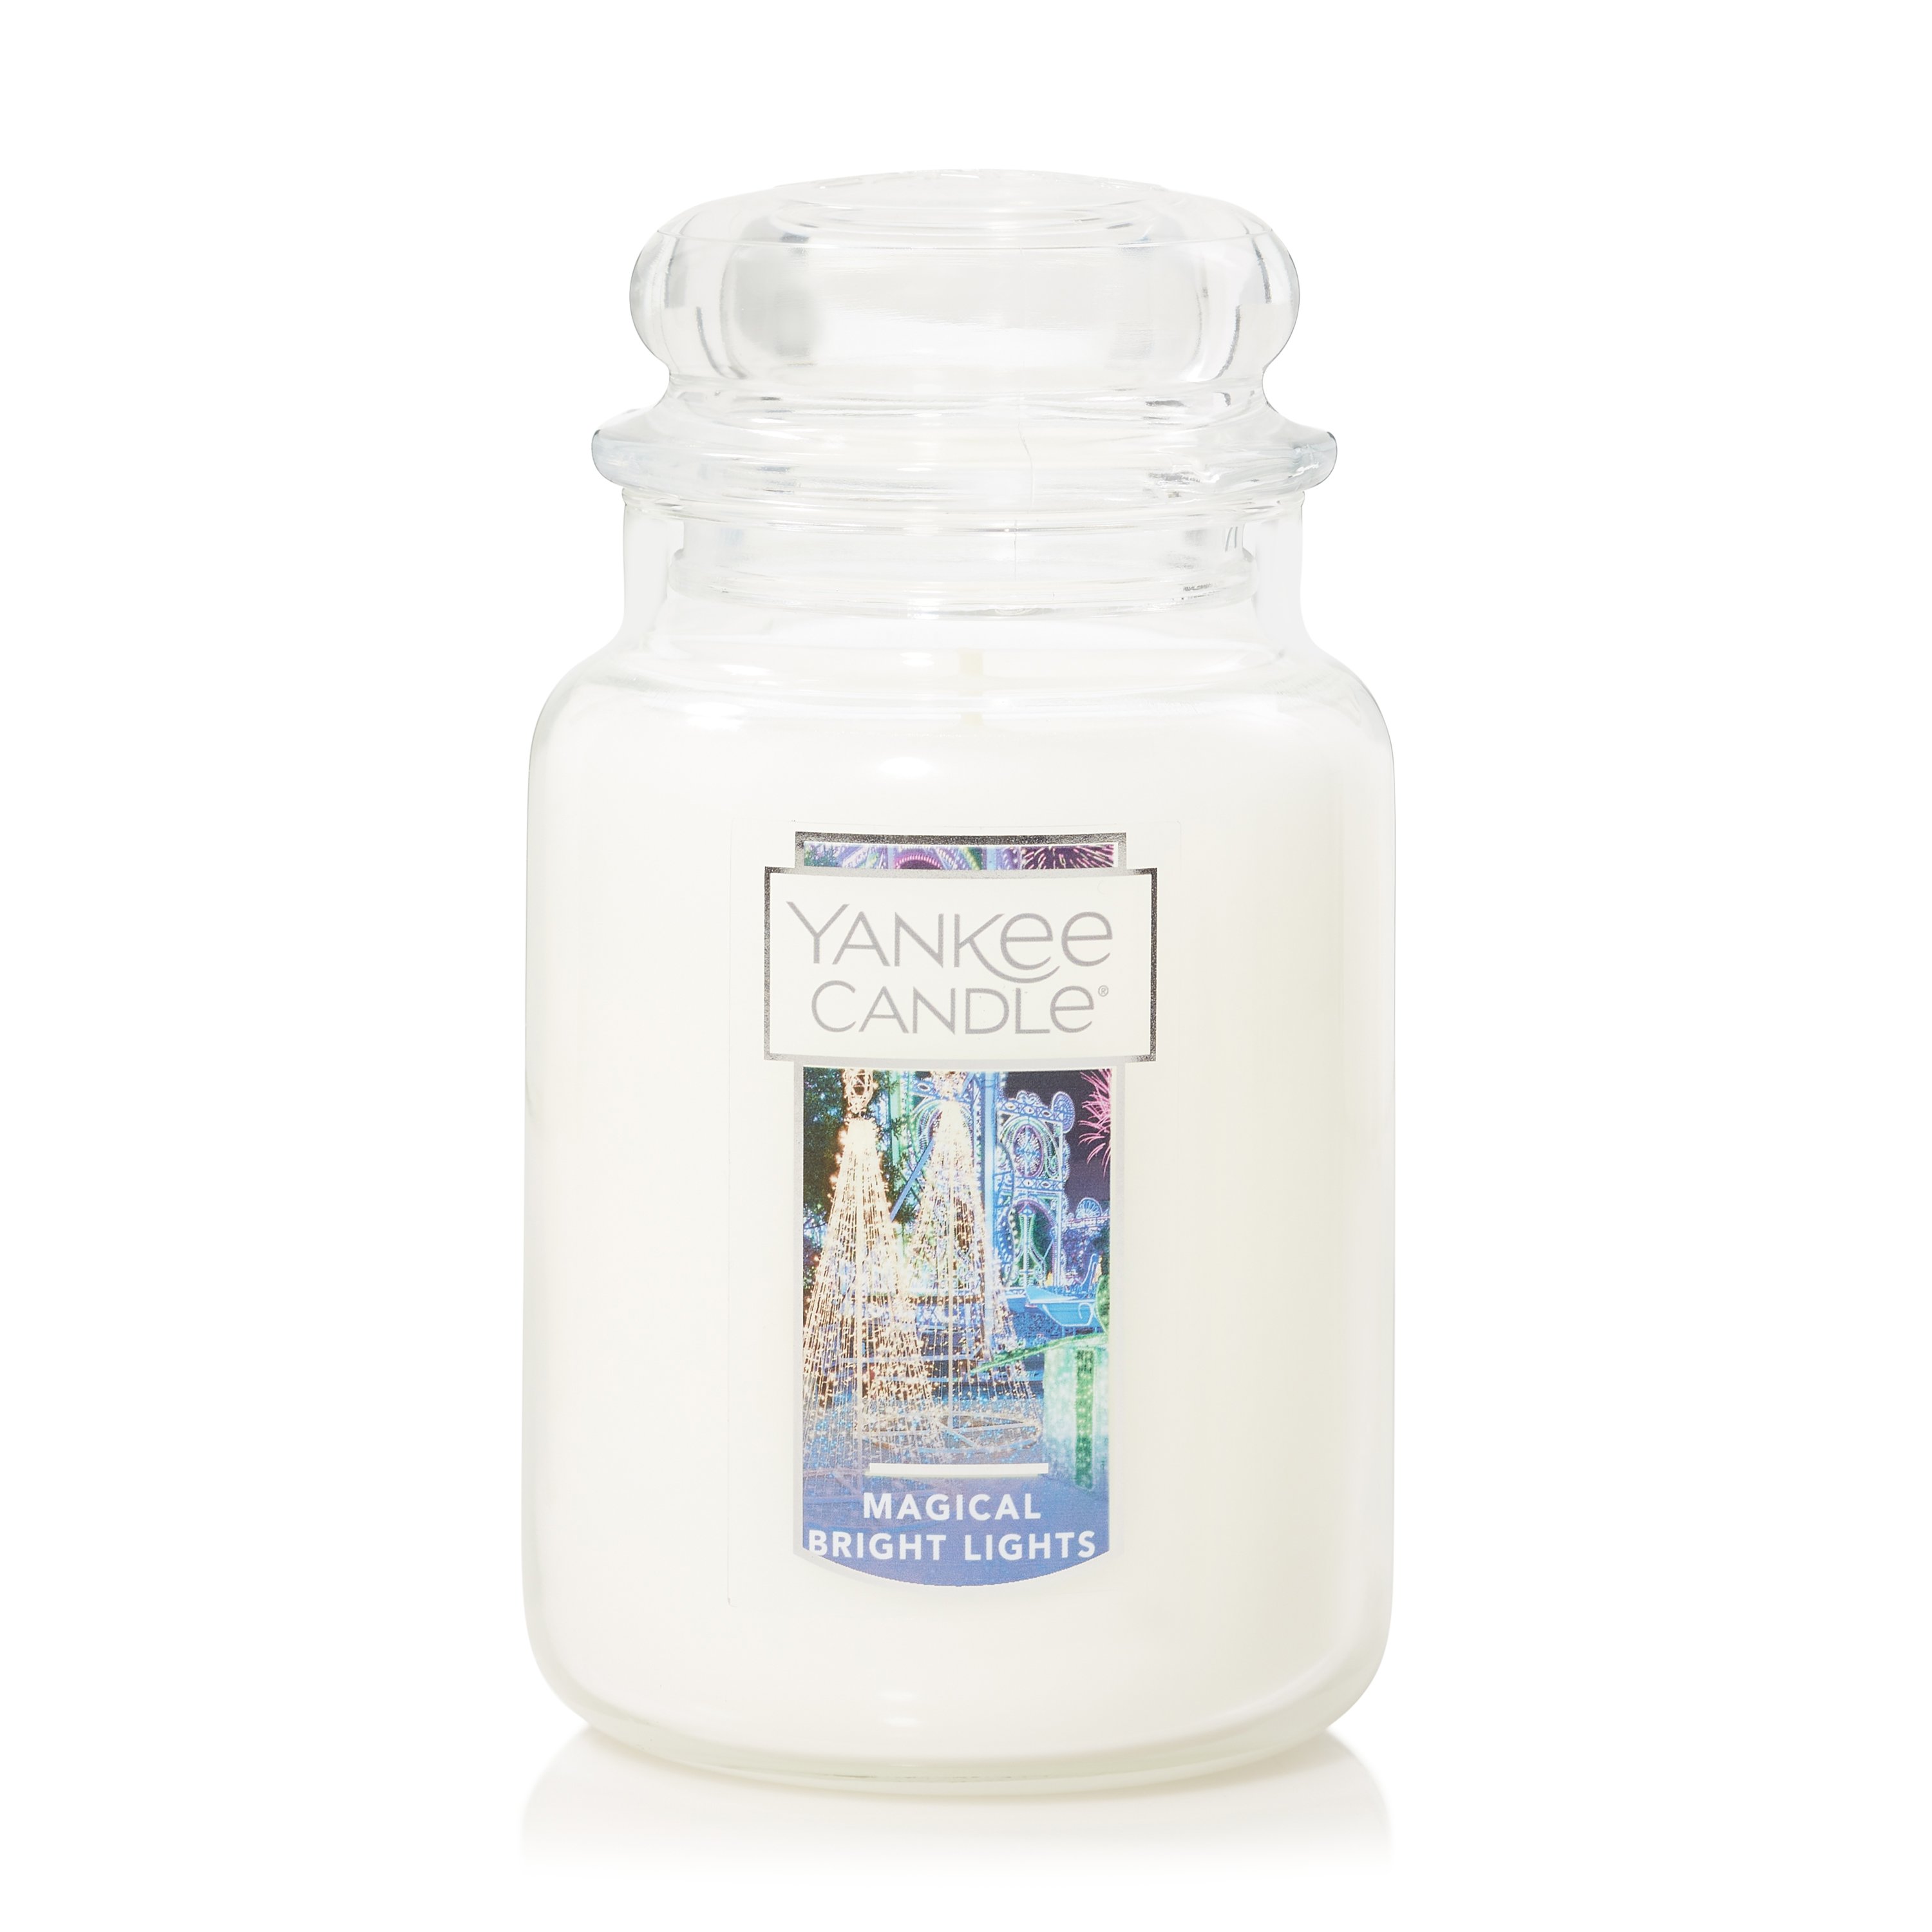  YANKEE CANDLE Vanilla Large Jar Candle, White : Home & Kitchen